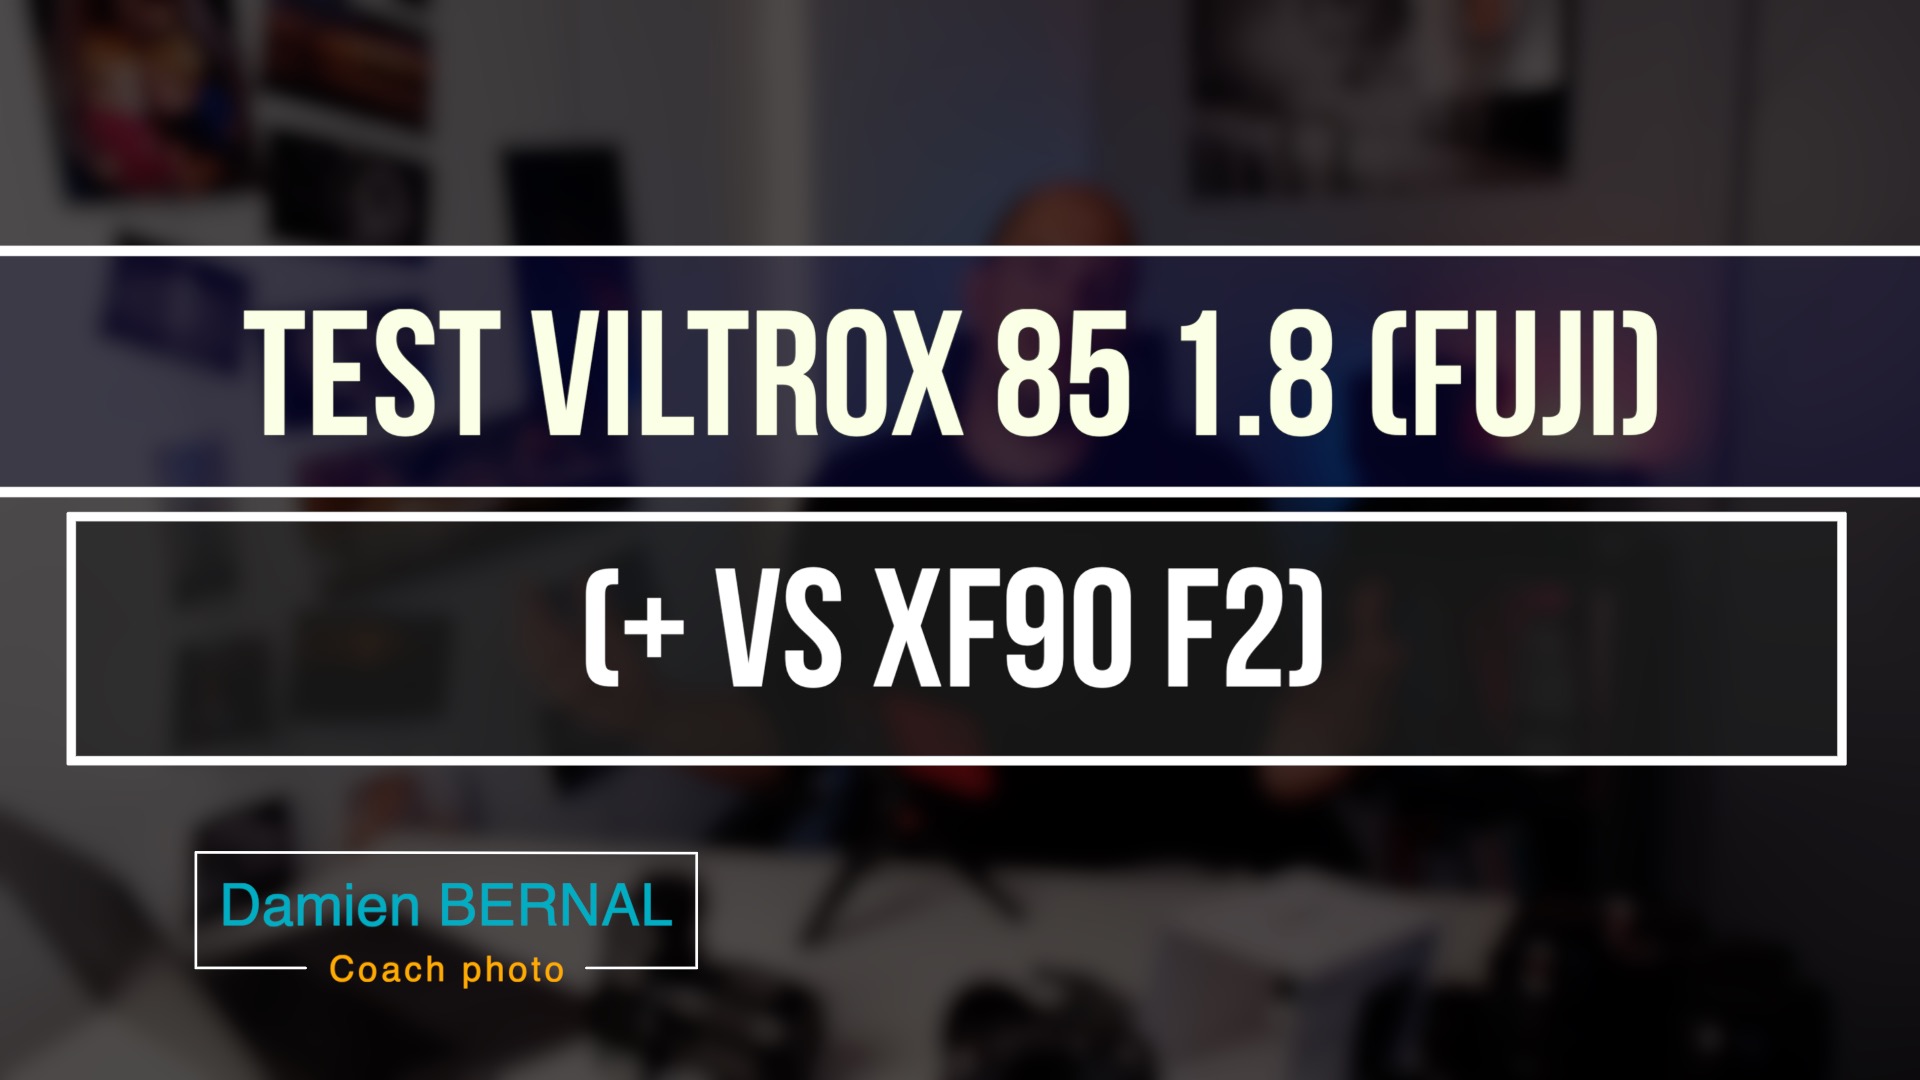 Test viltrox 85 1.8